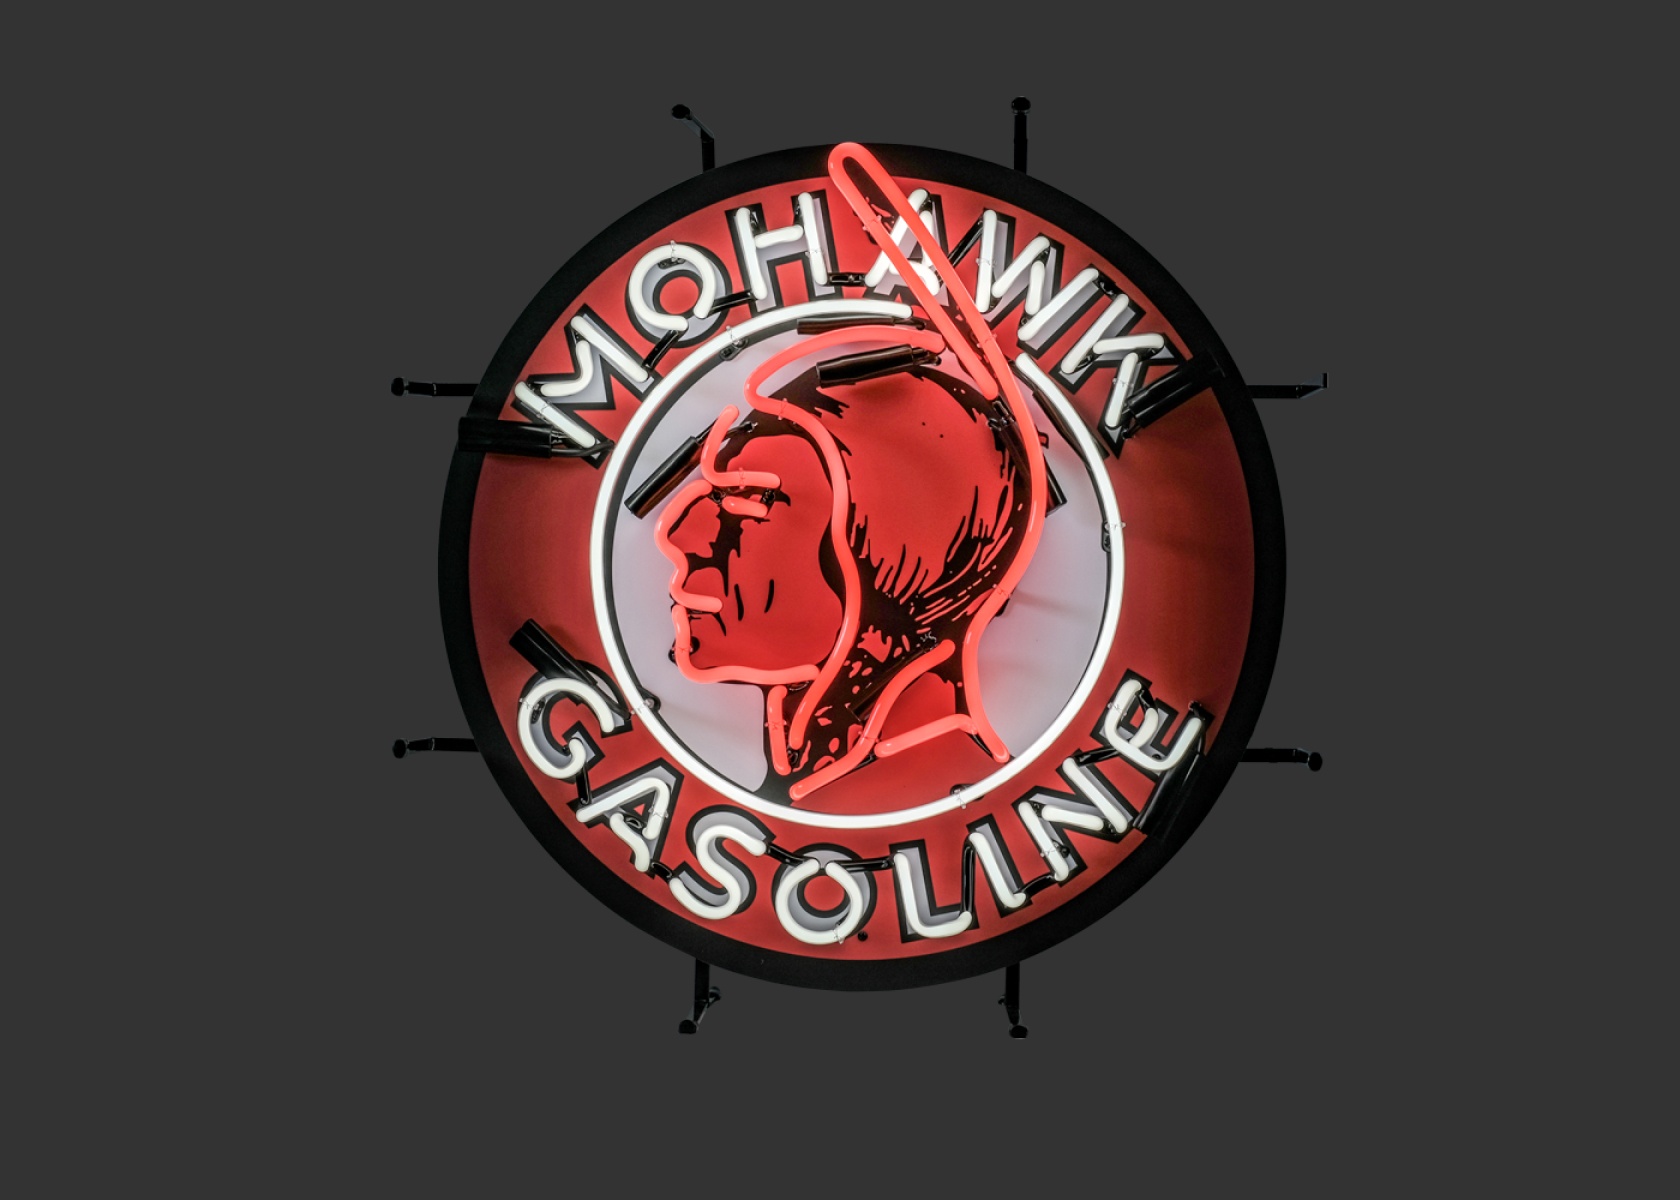 Mohawk Gasoline - 60 CM neon sign